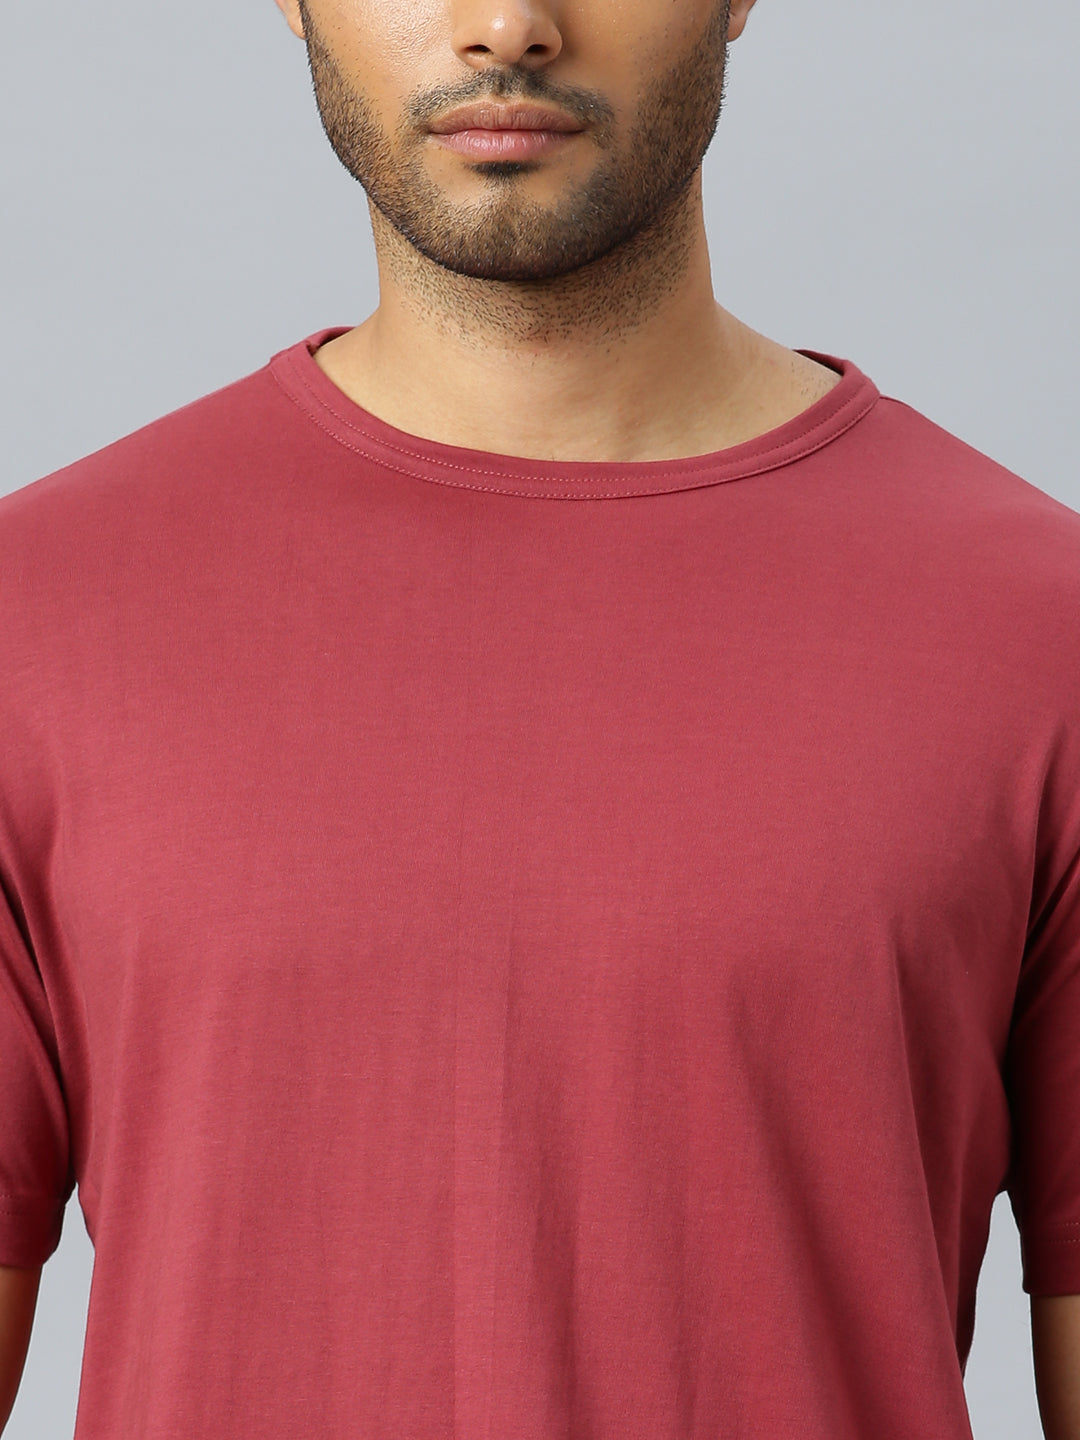 Don Vino Men's Garnet Red Solid Crew Neck T-Shirt